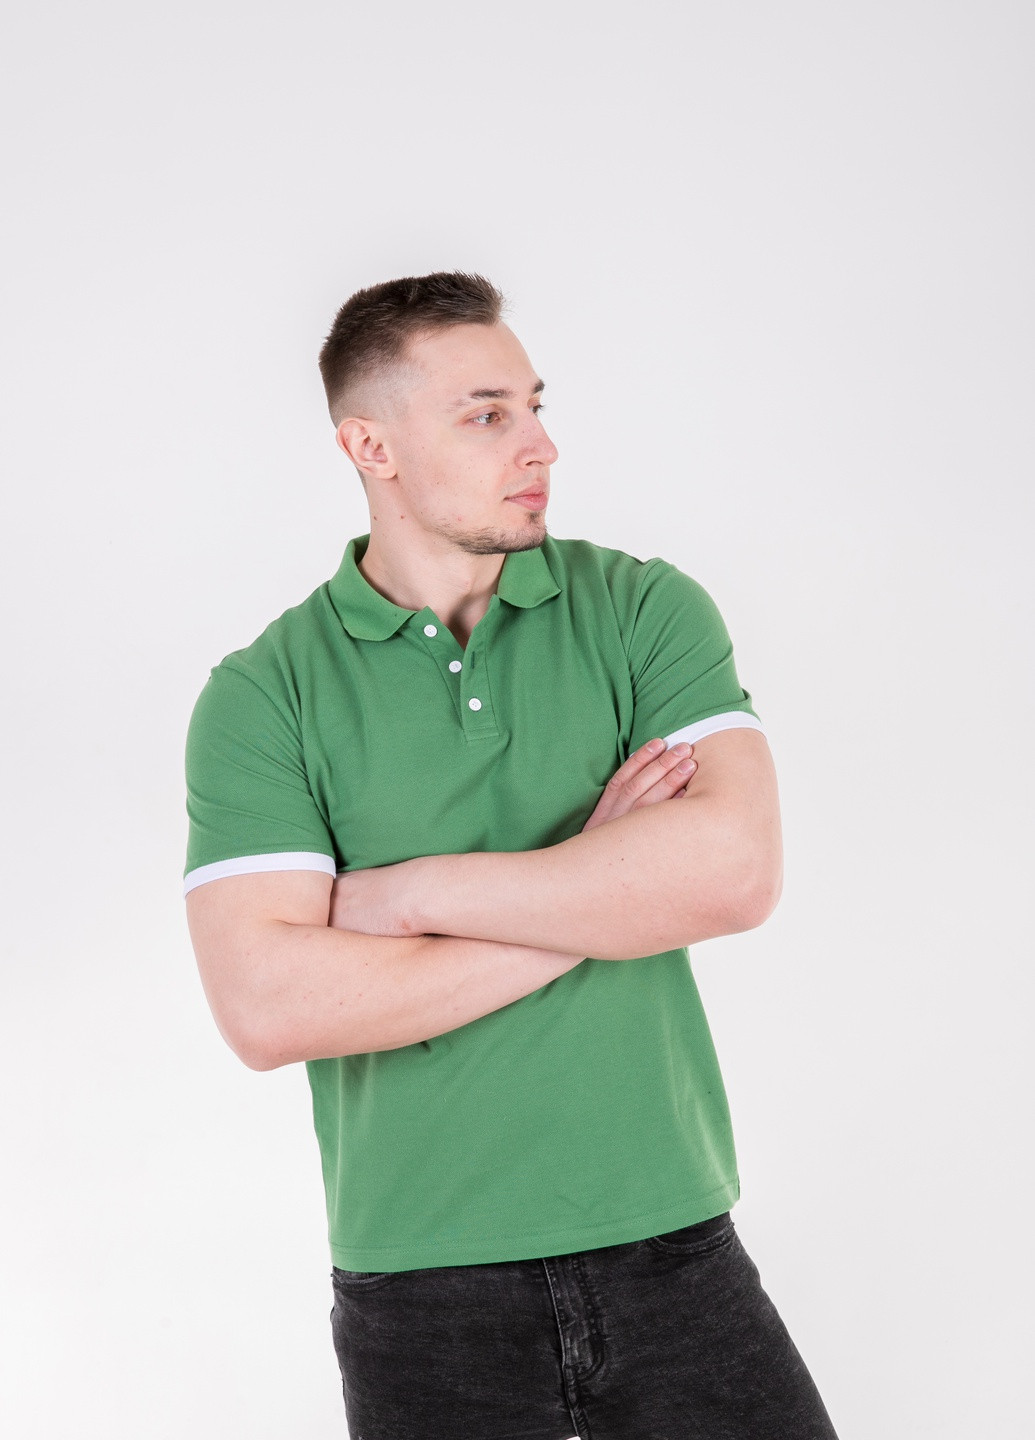 Зеленая футболка-футболка поло мужская для мужчин TvoePolo